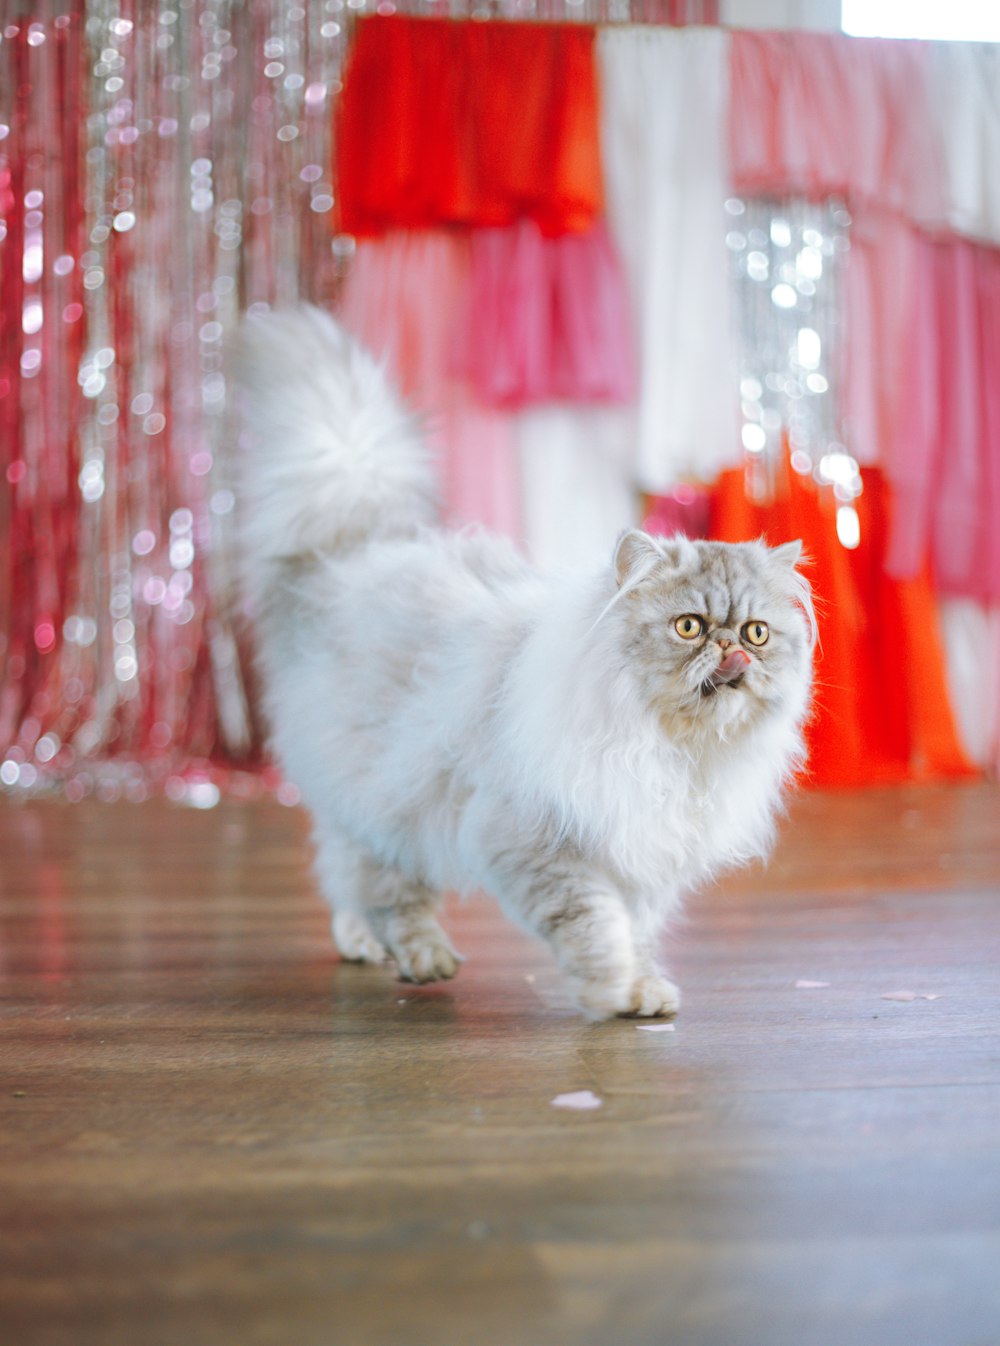 a fluffy white cat walking across a wooden floor